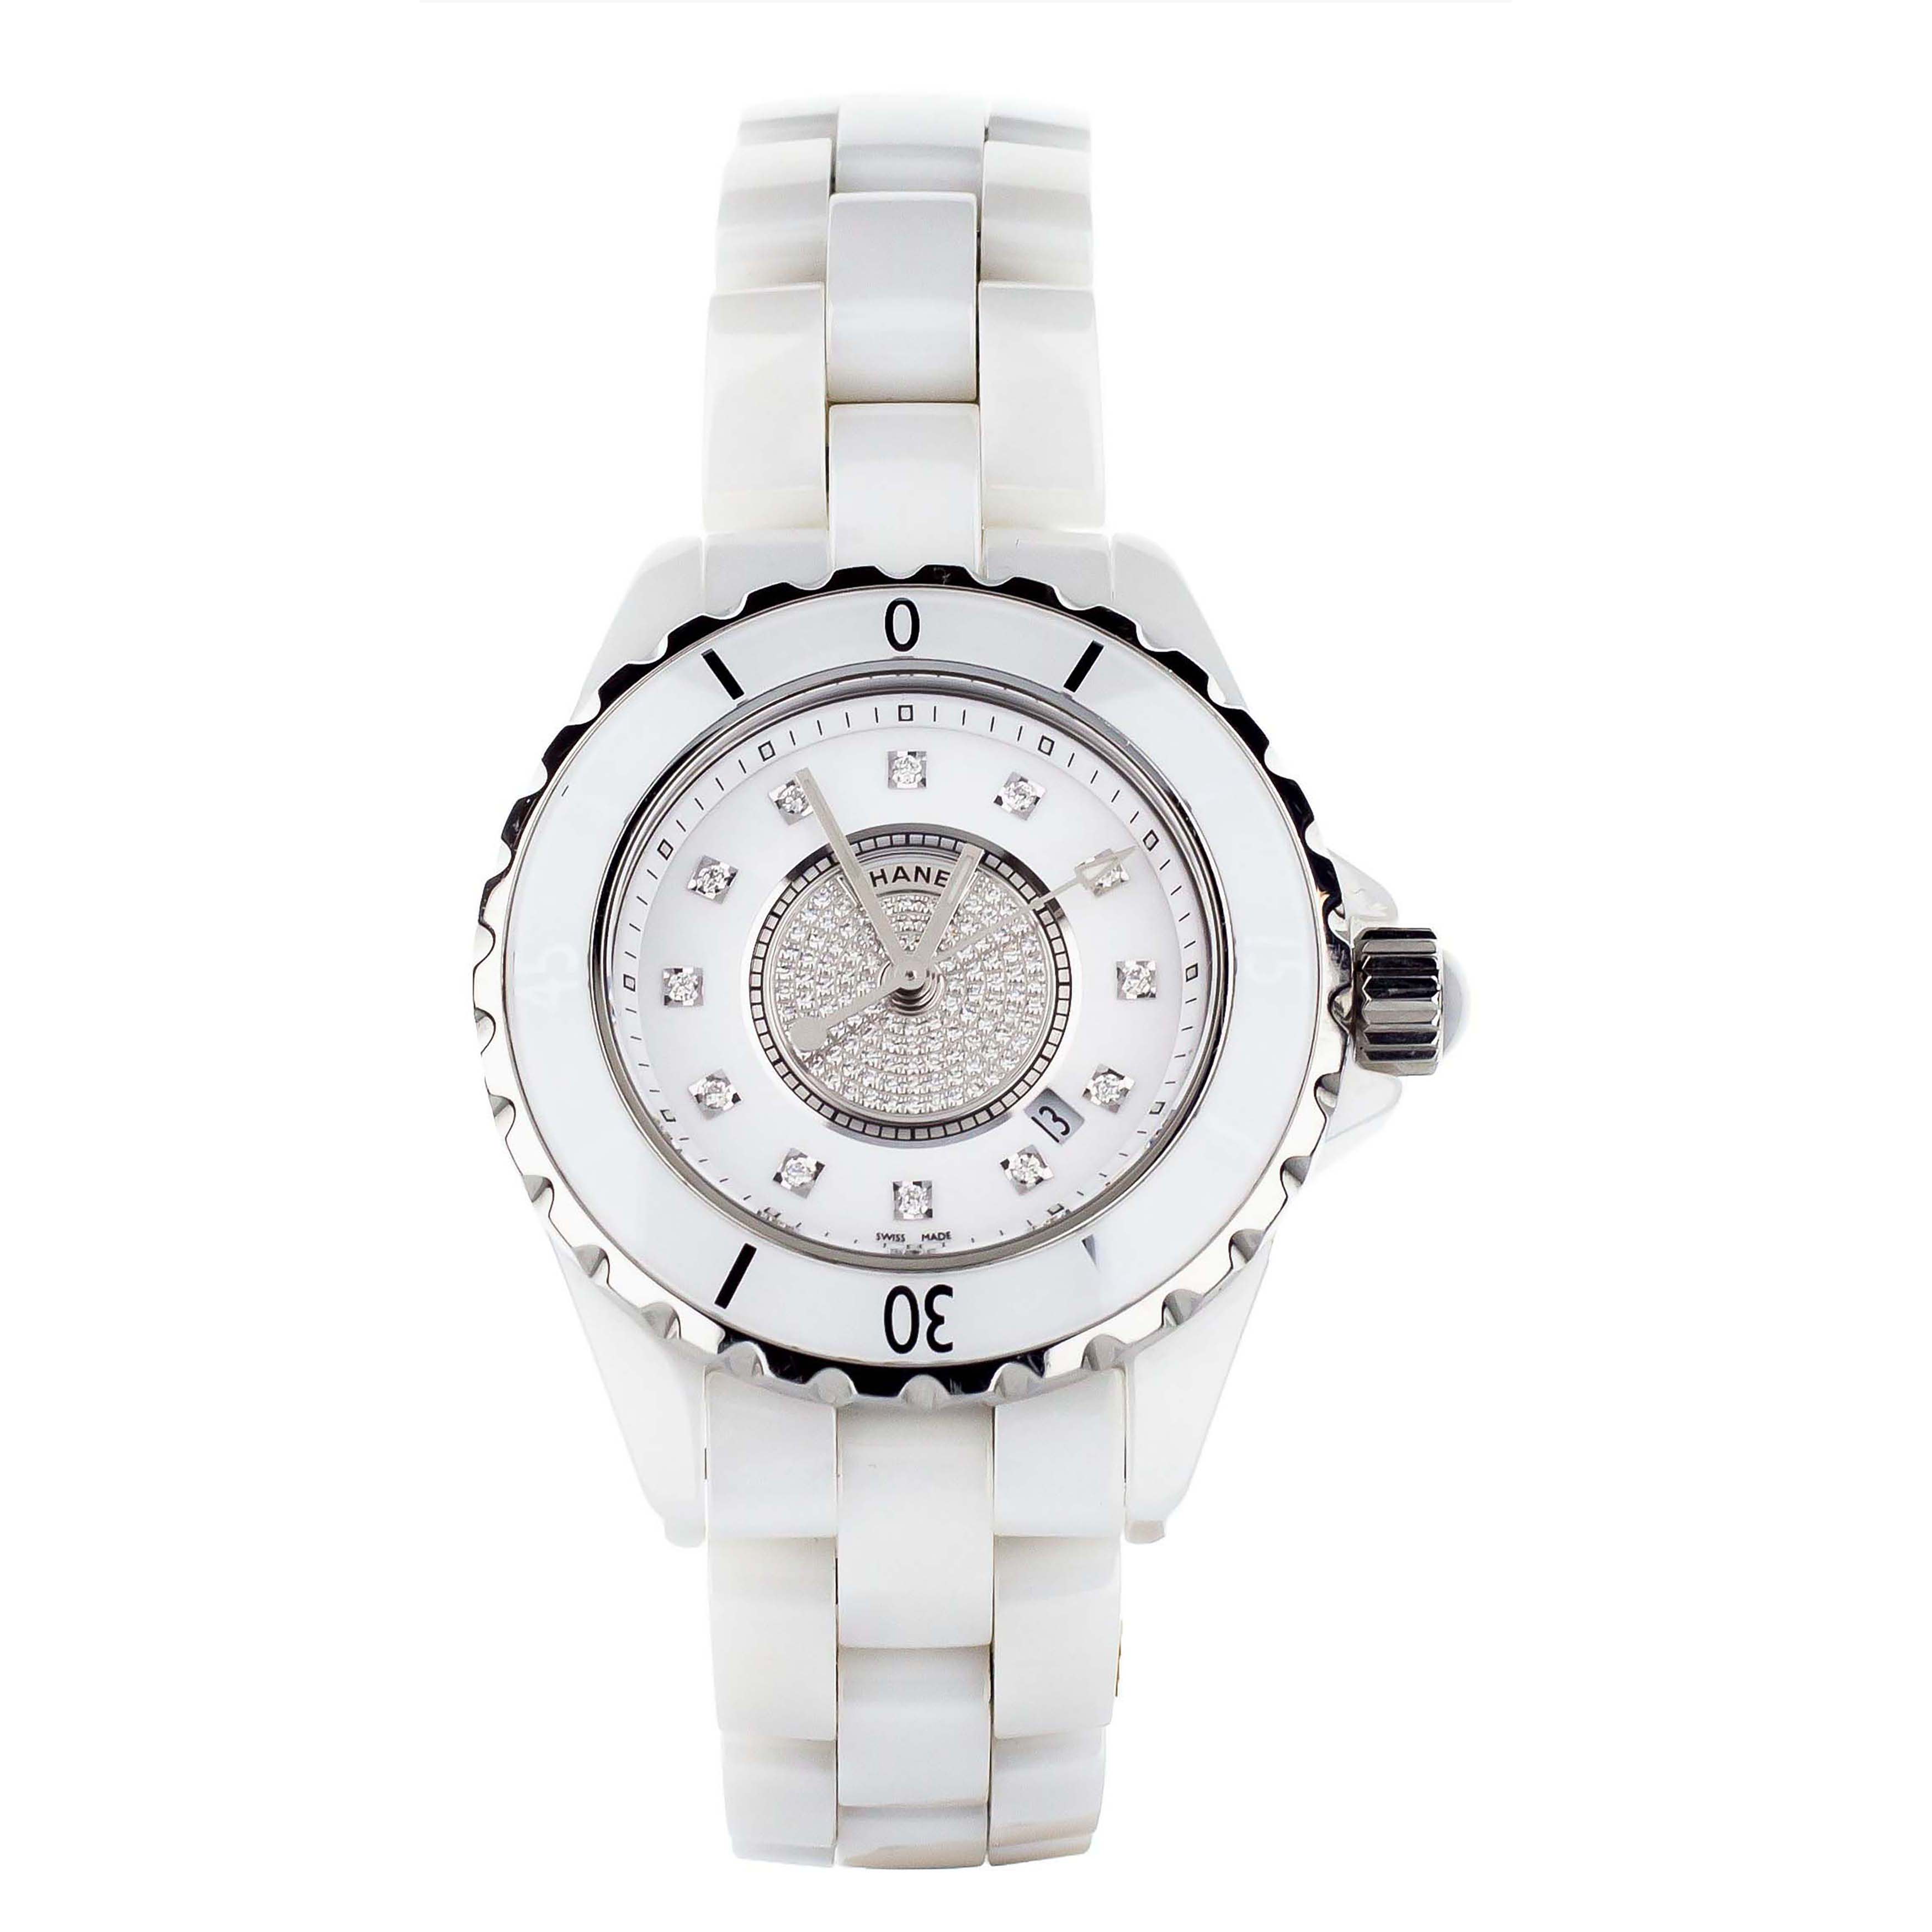 Chanel Ladies Watch J12 Diamond White